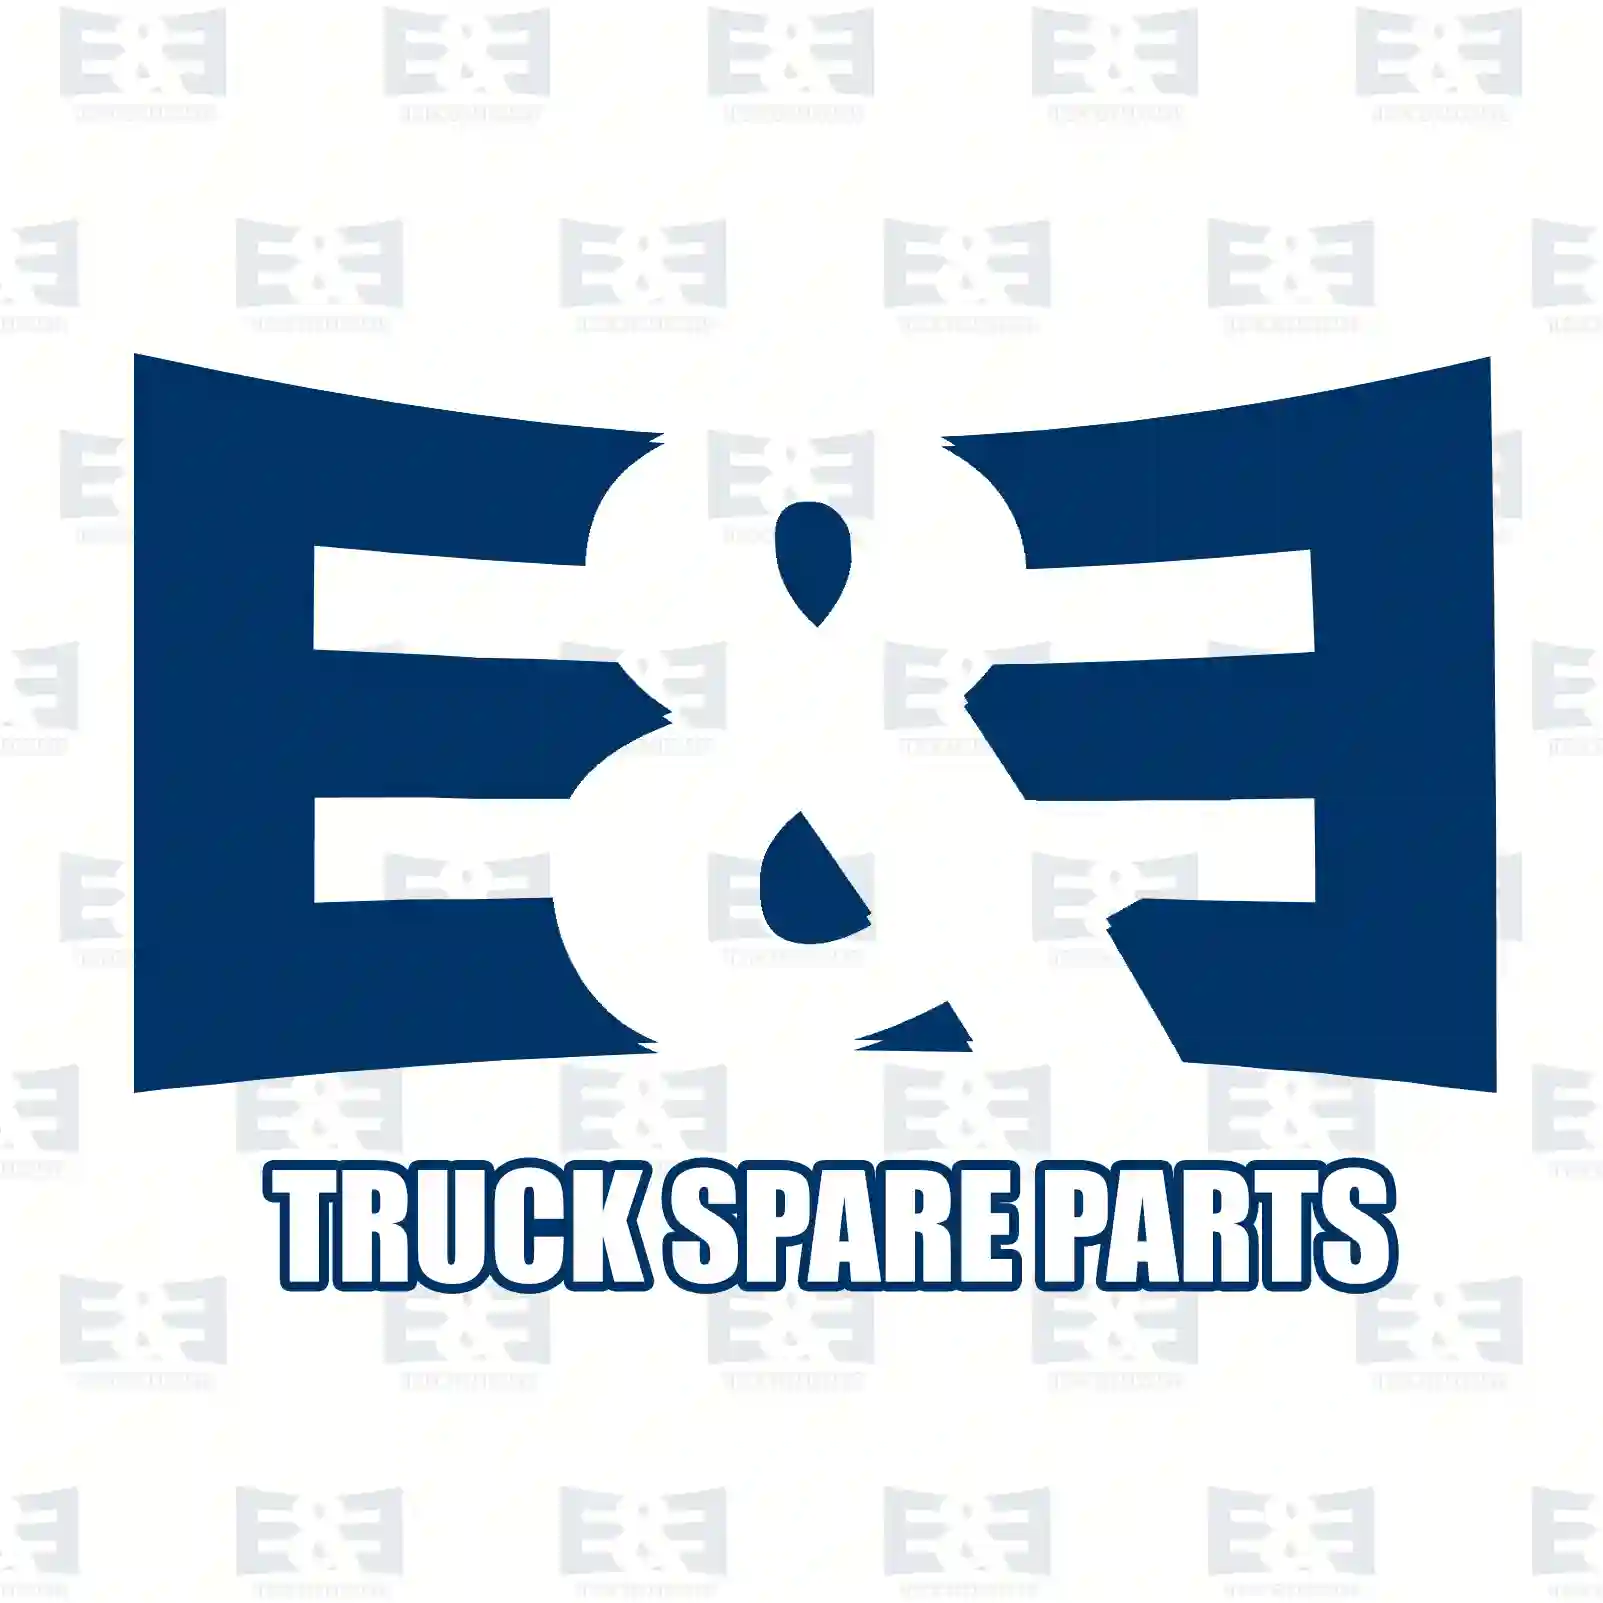 Wheel bearing unit, 2E2284953, 1735191, 7420516957, 7420518661, 7420535262, 7420819846, 7420819860, 2277946, 103444, 20517163, 20535230, 205352445, 20558966, 3987673, 3989896, 9955401 ||  2E2284953 E&E Truck Spare Parts | Truck Spare Parts, Auotomotive Spare Parts Wheel bearing unit, 2E2284953, 1735191, 7420516957, 7420518661, 7420535262, 7420819846, 7420819860, 2277946, 103444, 20517163, 20535230, 205352445, 20558966, 3987673, 3989896, 9955401 ||  2E2284953 E&E Truck Spare Parts | Truck Spare Parts, Auotomotive Spare Parts